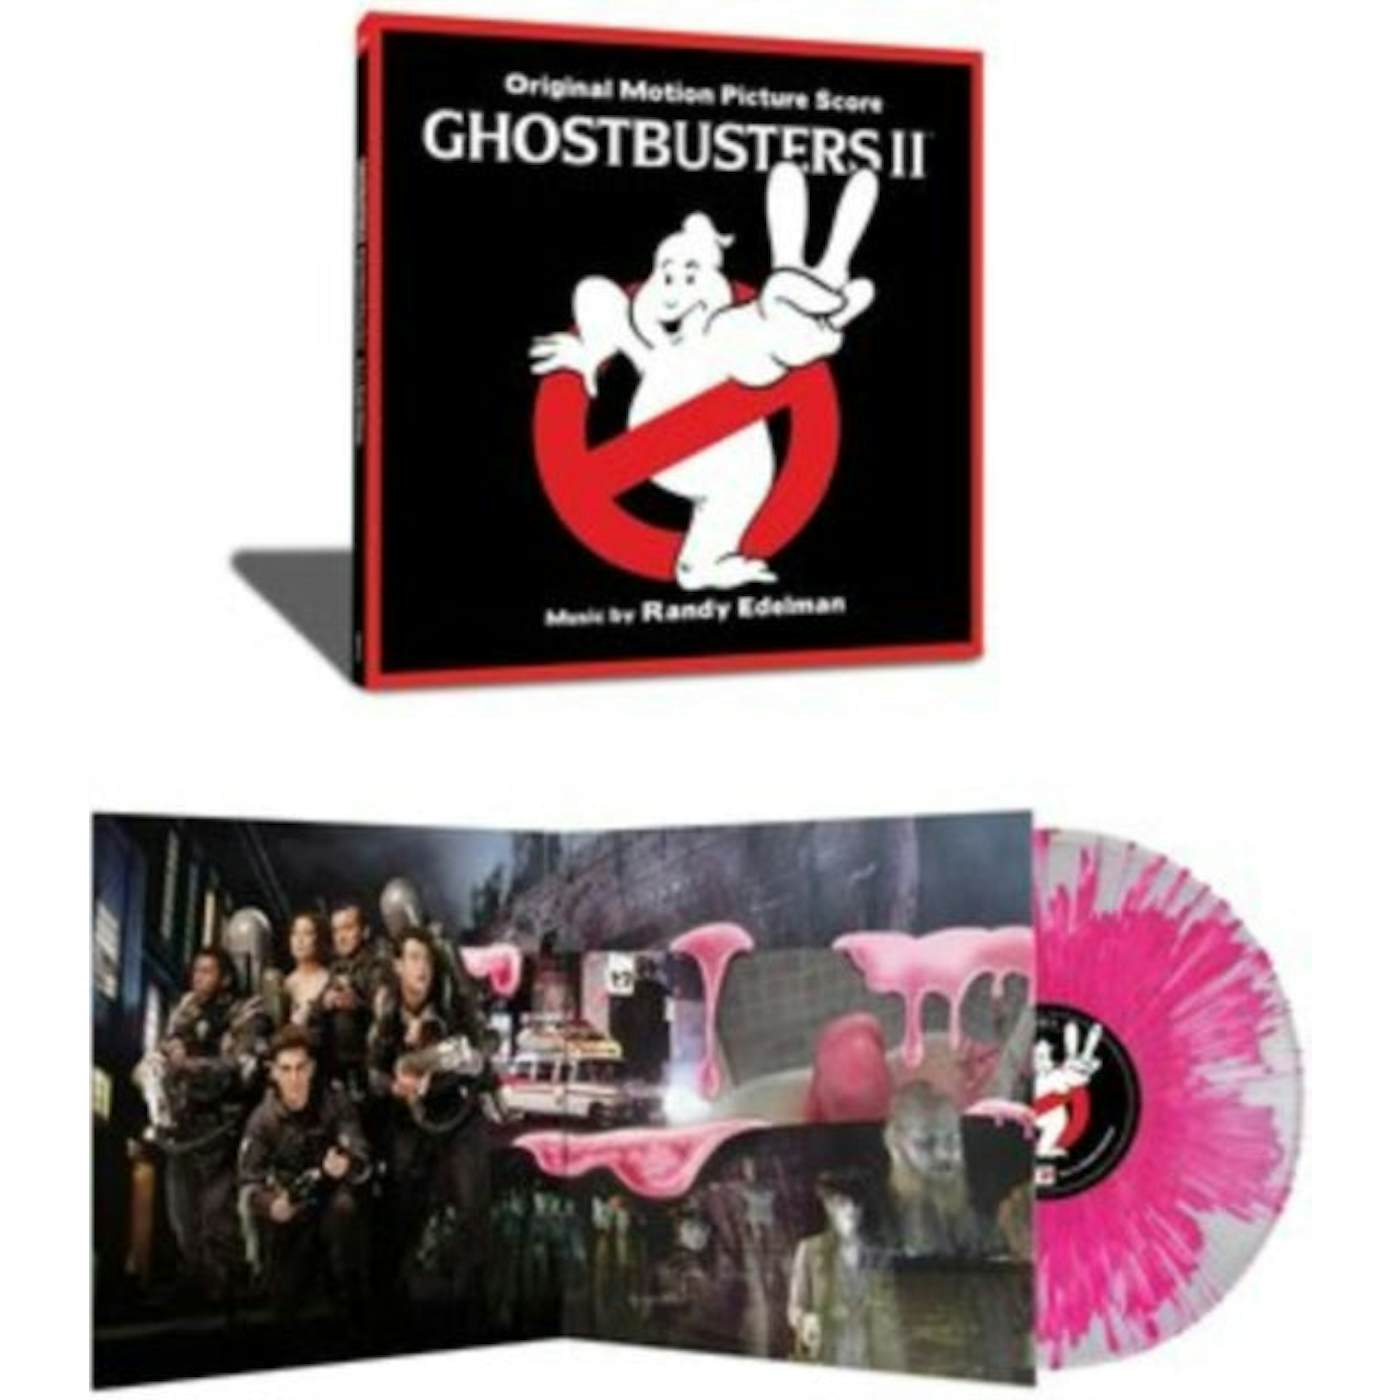 Ghostbuster II, Randy Edelman LP Vinyl Record - Original Soundtrack